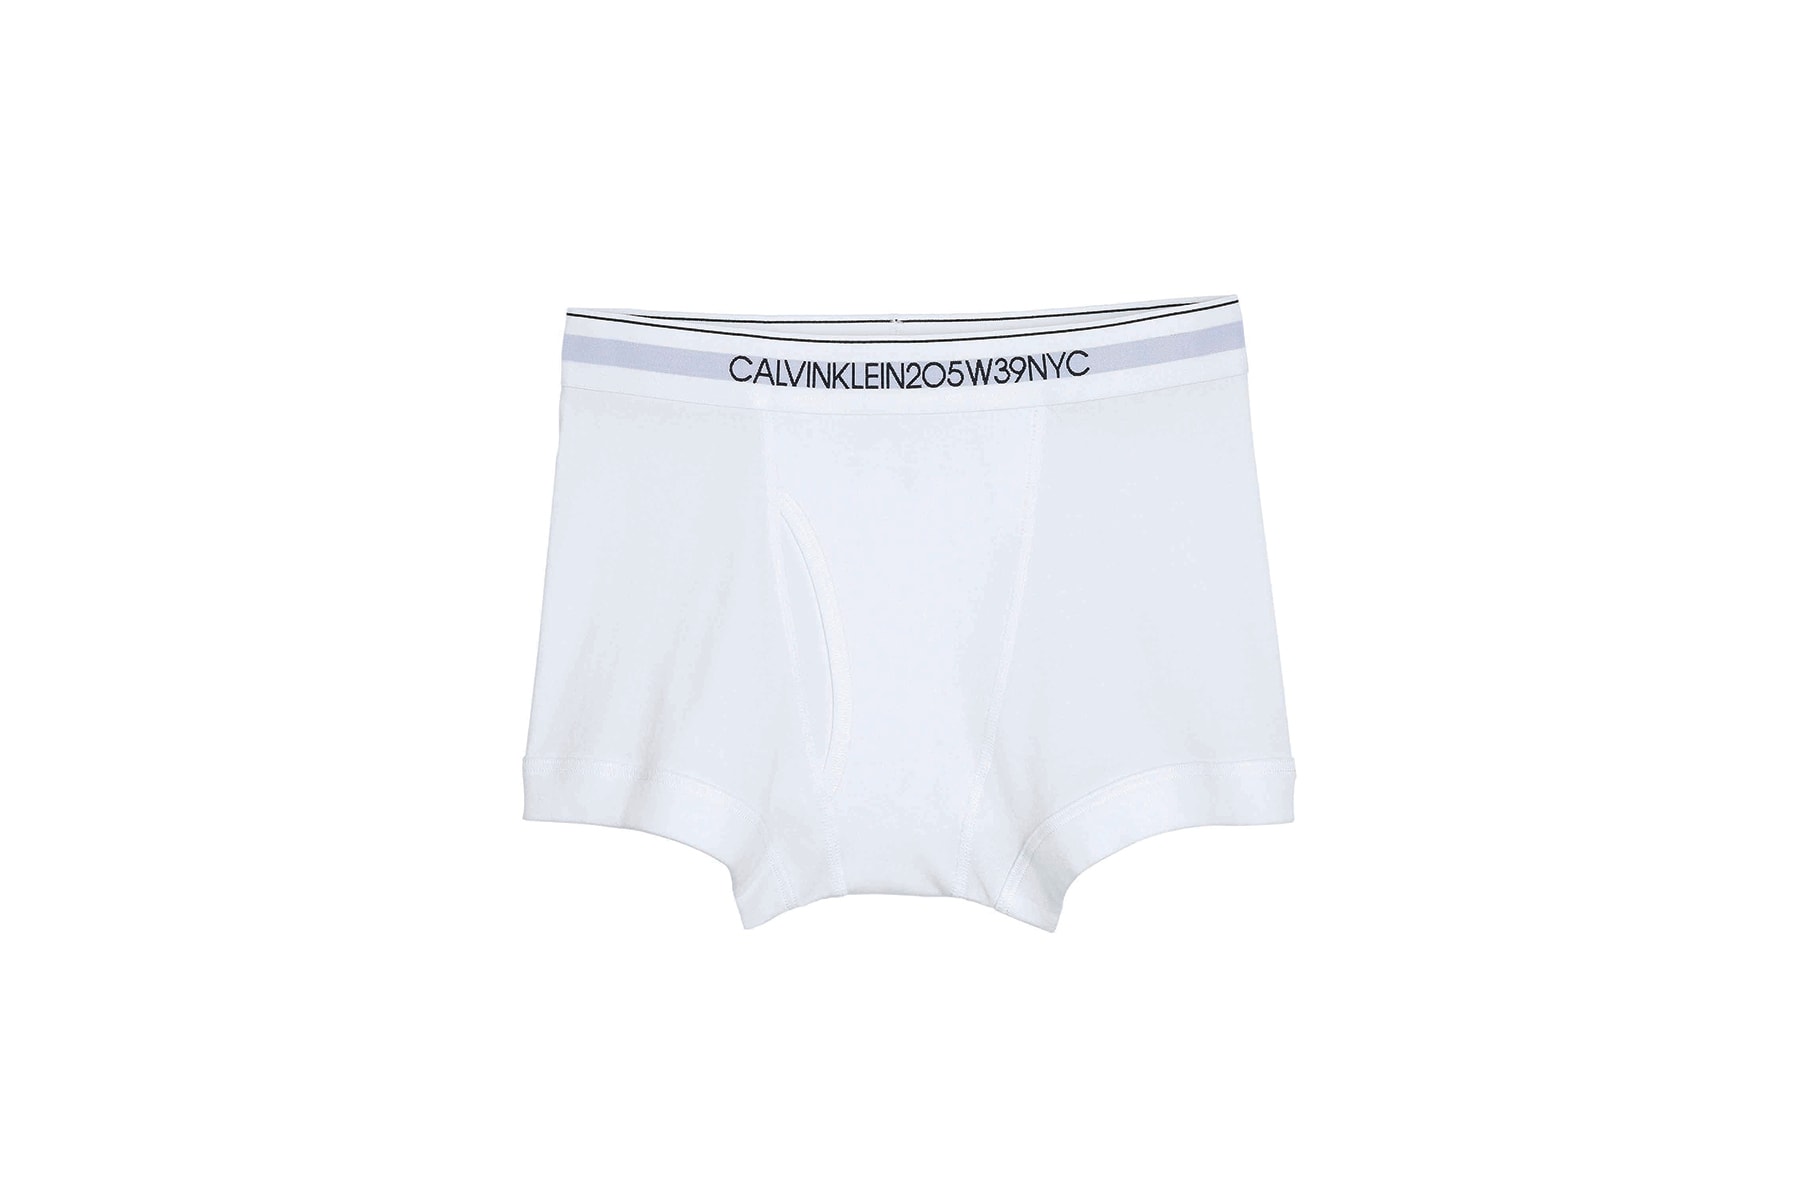 Calvin Klein 205W39NYC Raf Simons Underwear Lookbook